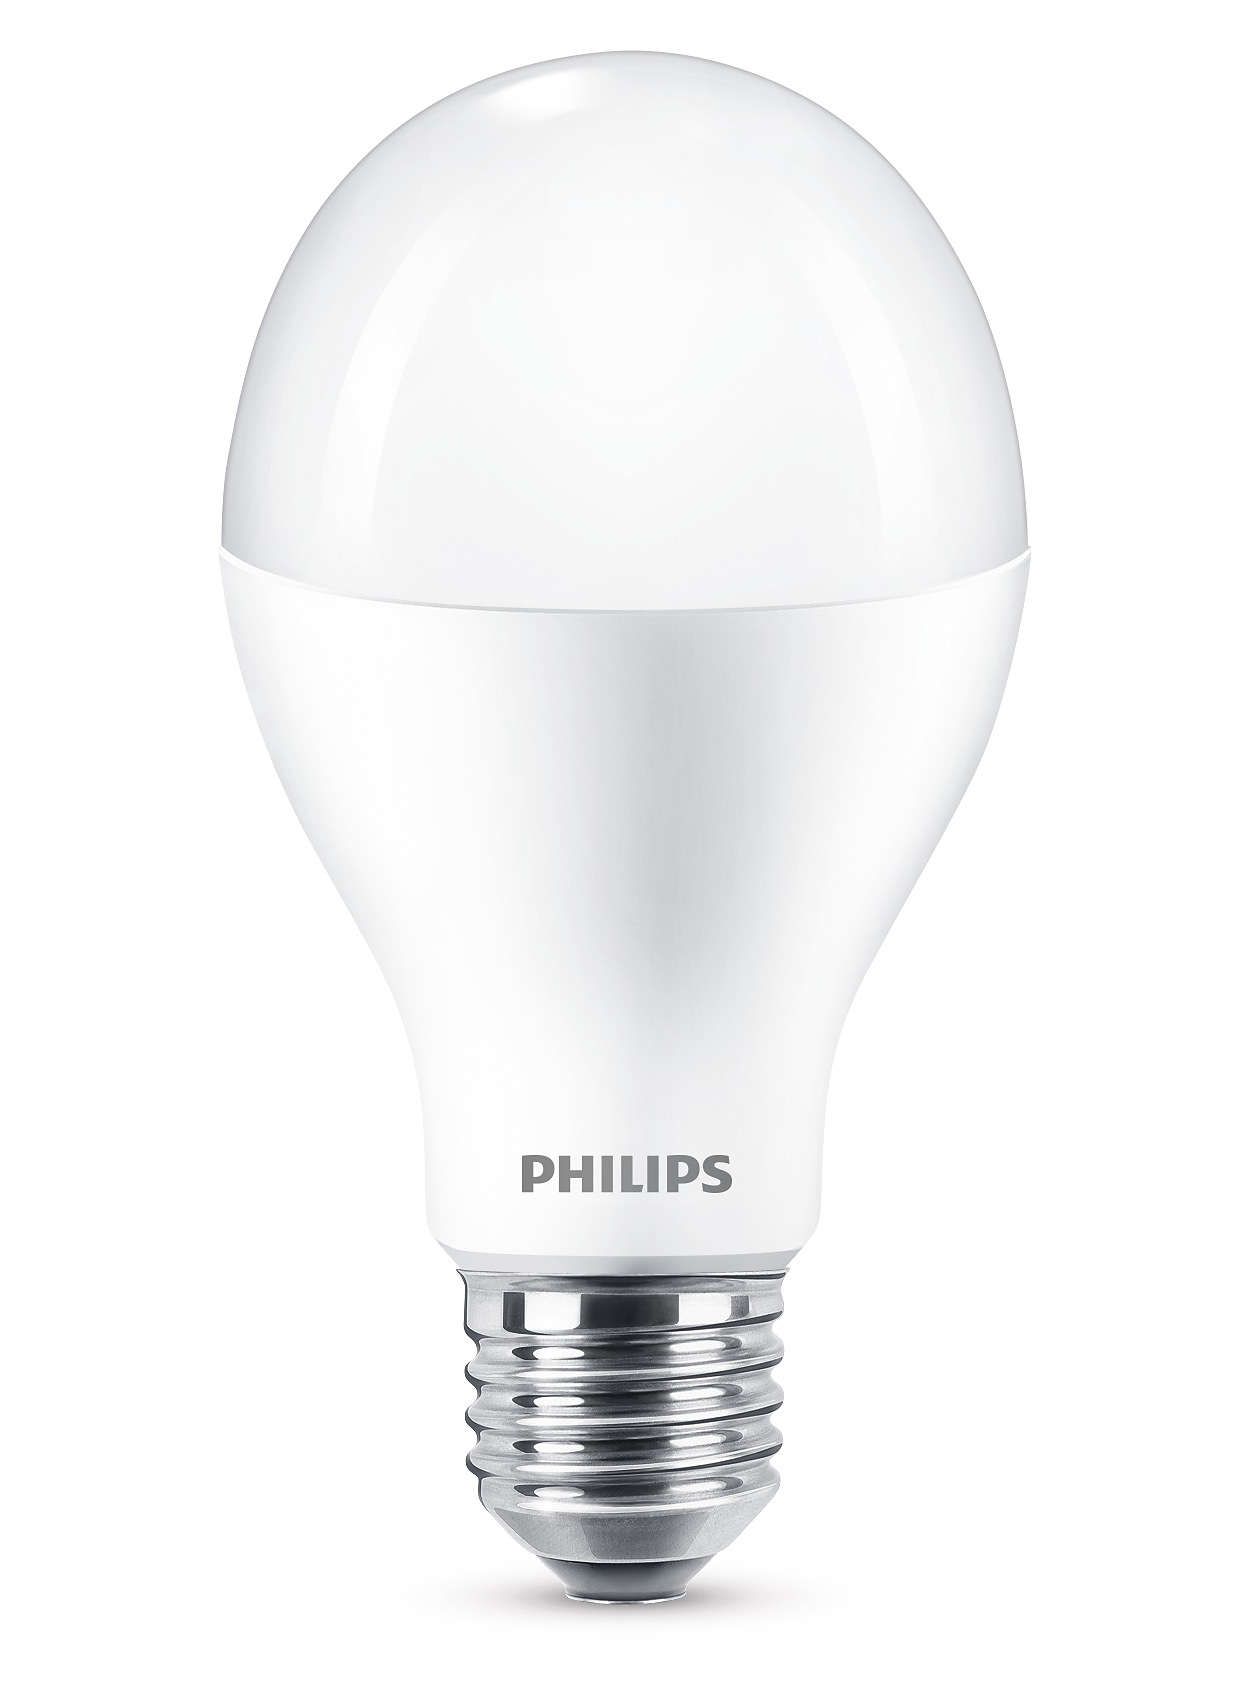 Lemputė LED E27 230V 17W A70 (120W), 2000lm, šiltai balta, PHILIPS PHIL/313201 8718696701614